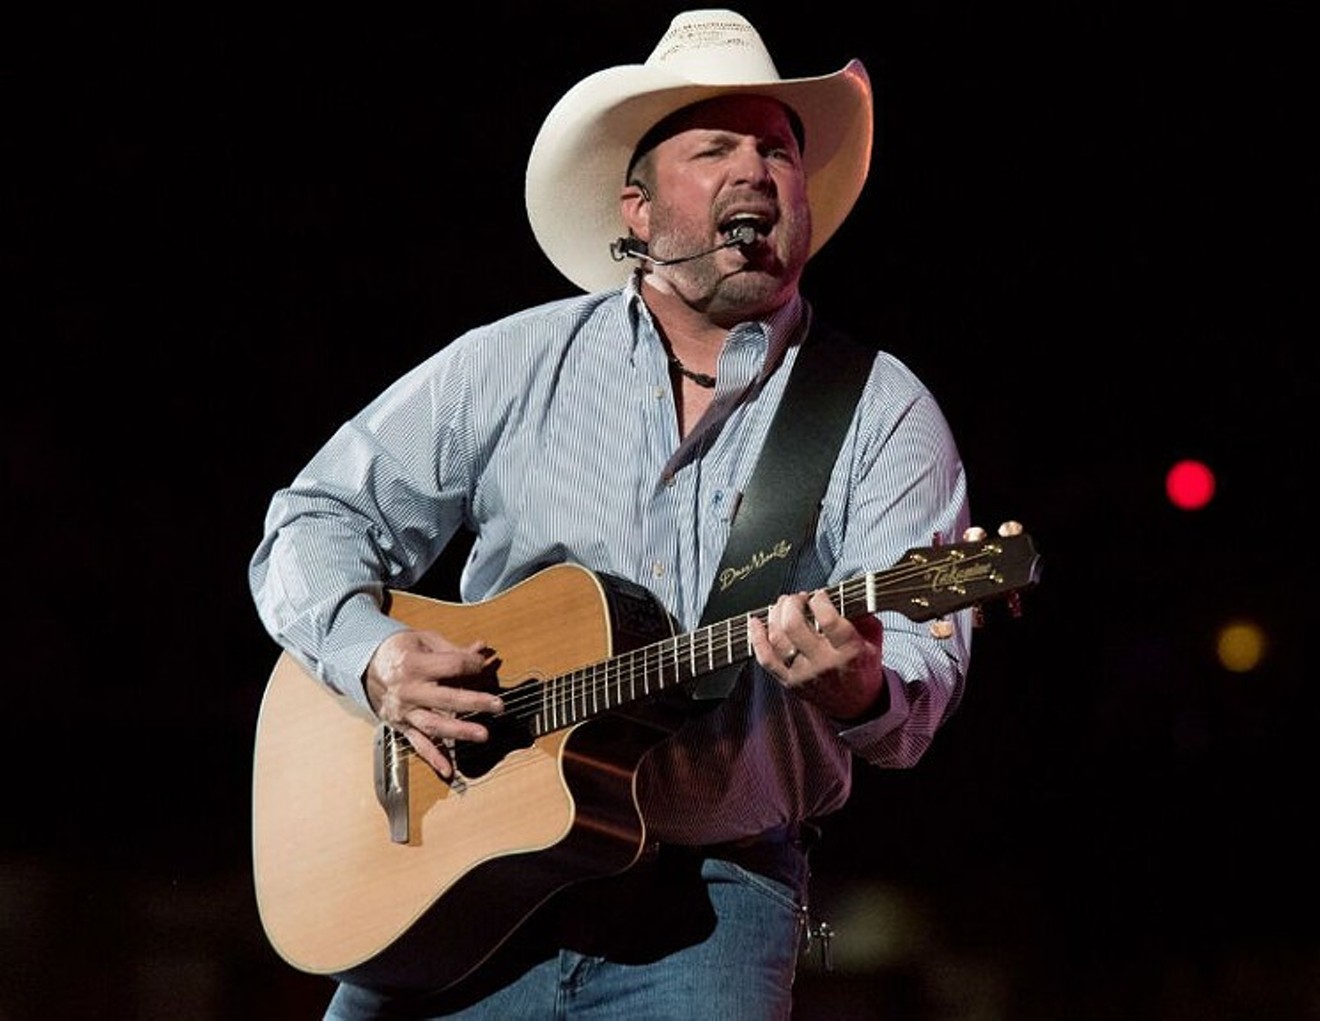 Garth Brooks at RodeoHouston in 2018